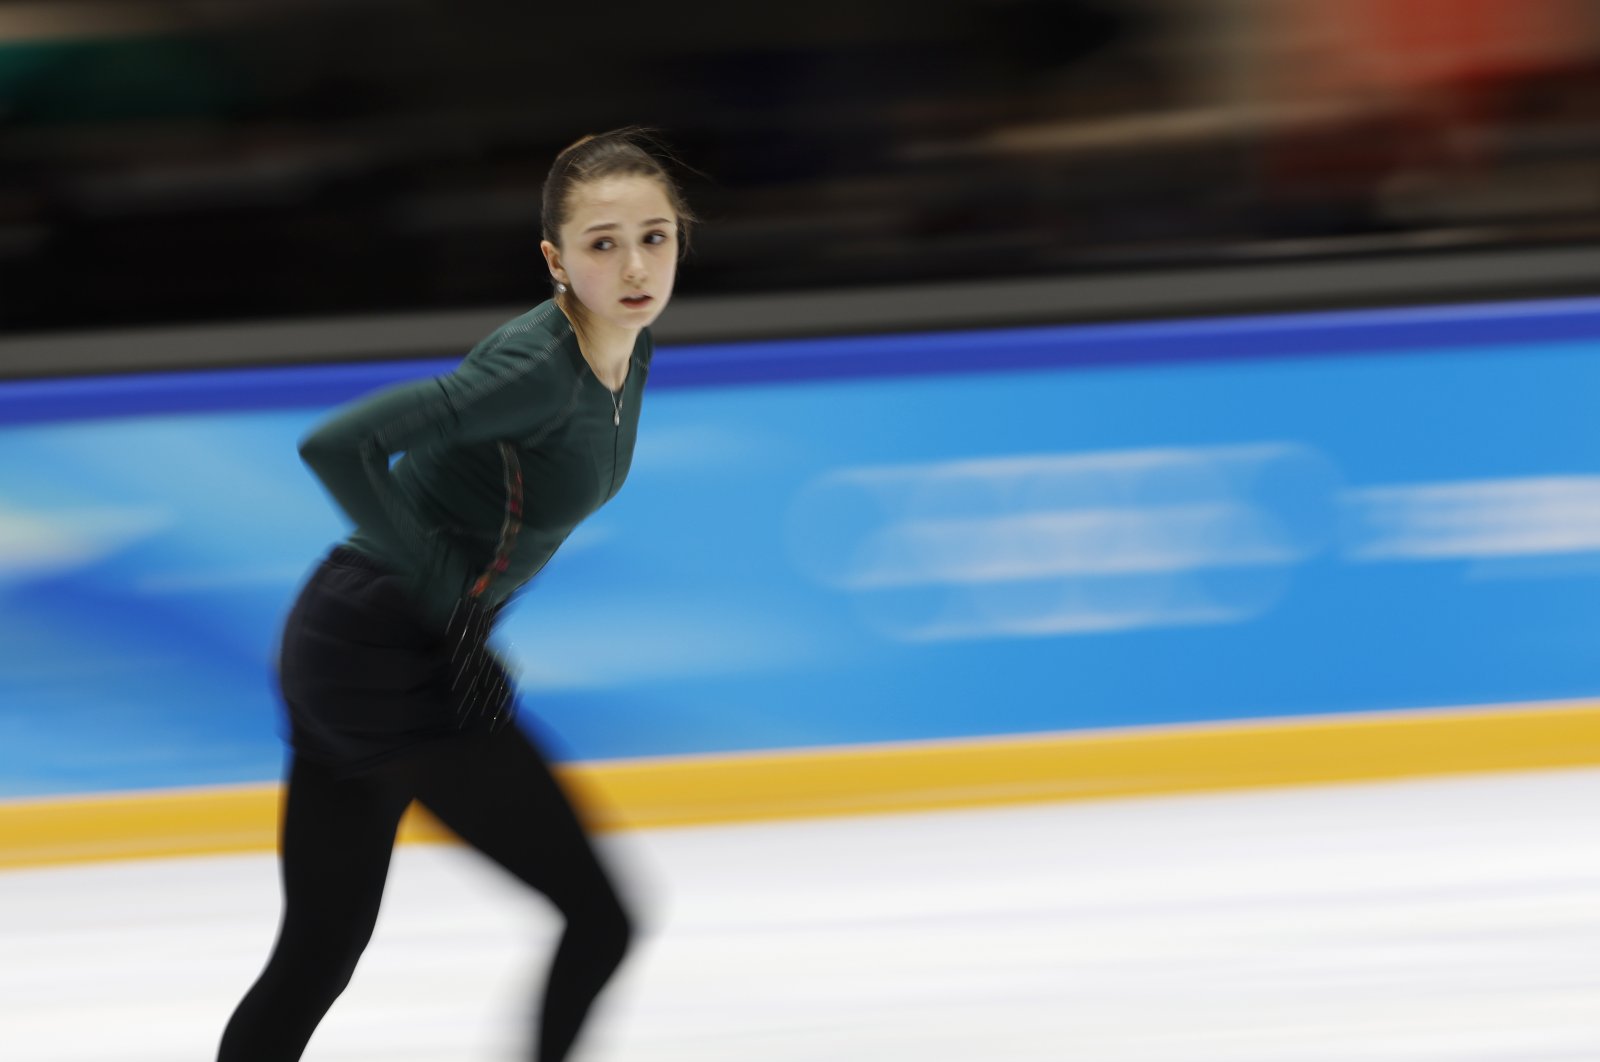 Russian Olympic Committee&#039;s (ROC) figure skater Kamila Valieva trains at the Beijing 2022 Olympic Games, Beijing, China, Feb. 14, 2022. (EPA Photo)